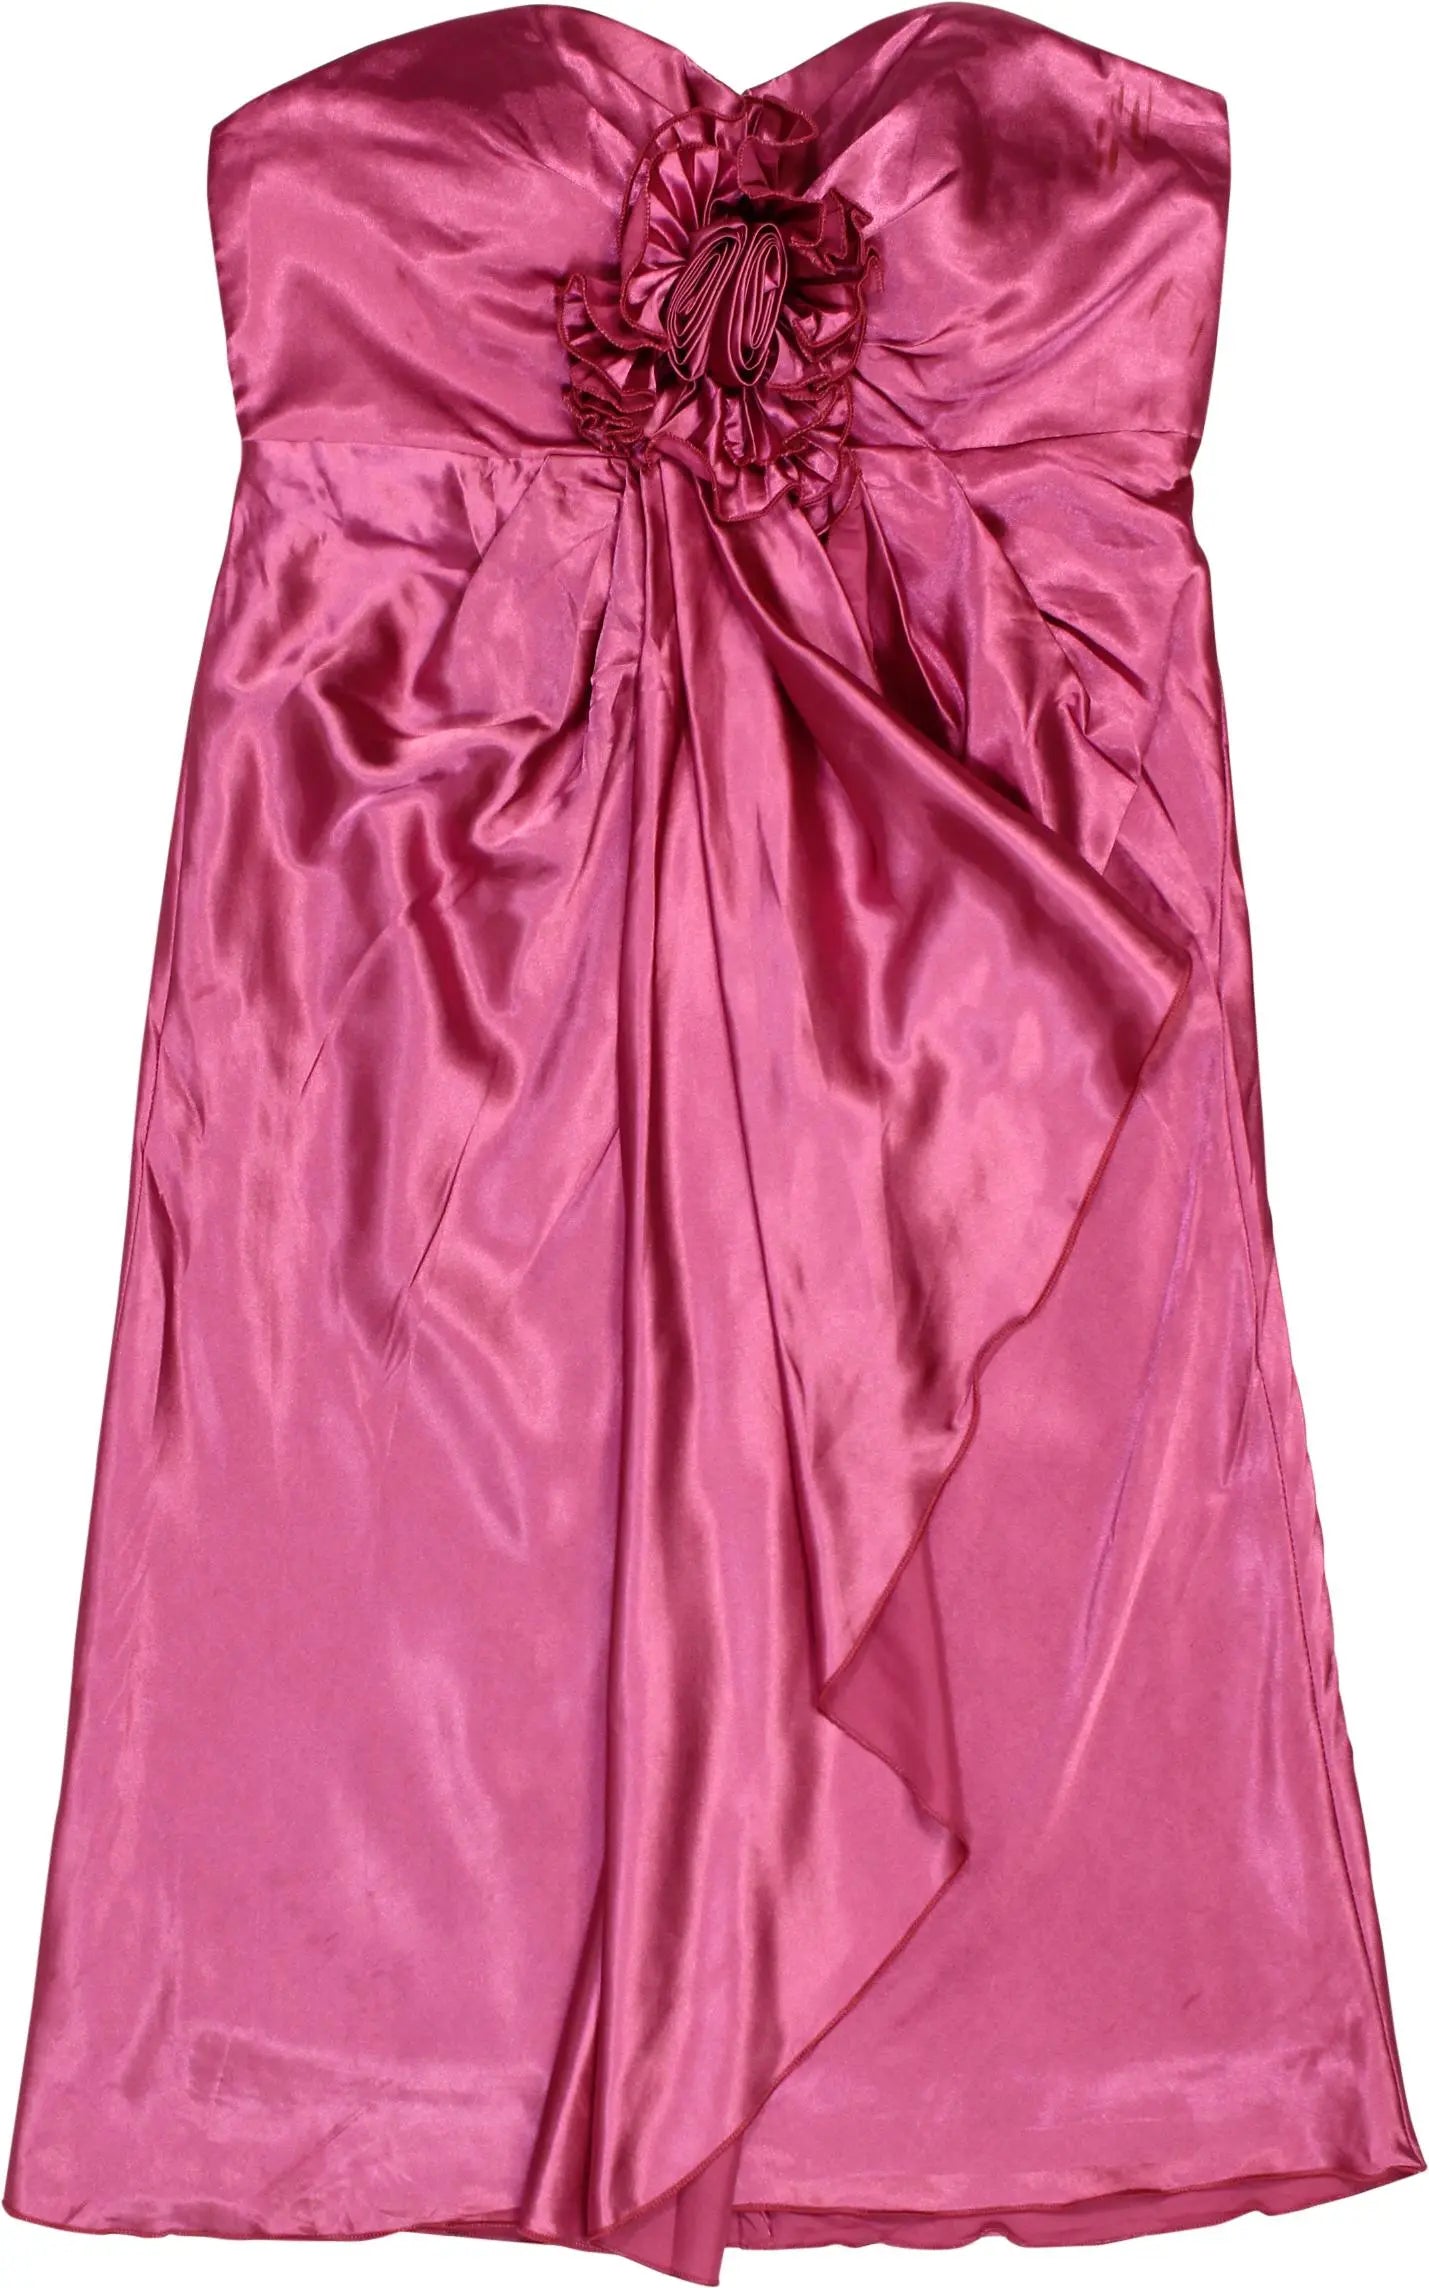 SandriLine - 80s Satin Dress- ThriftTale.com - Vintage and second handclothing